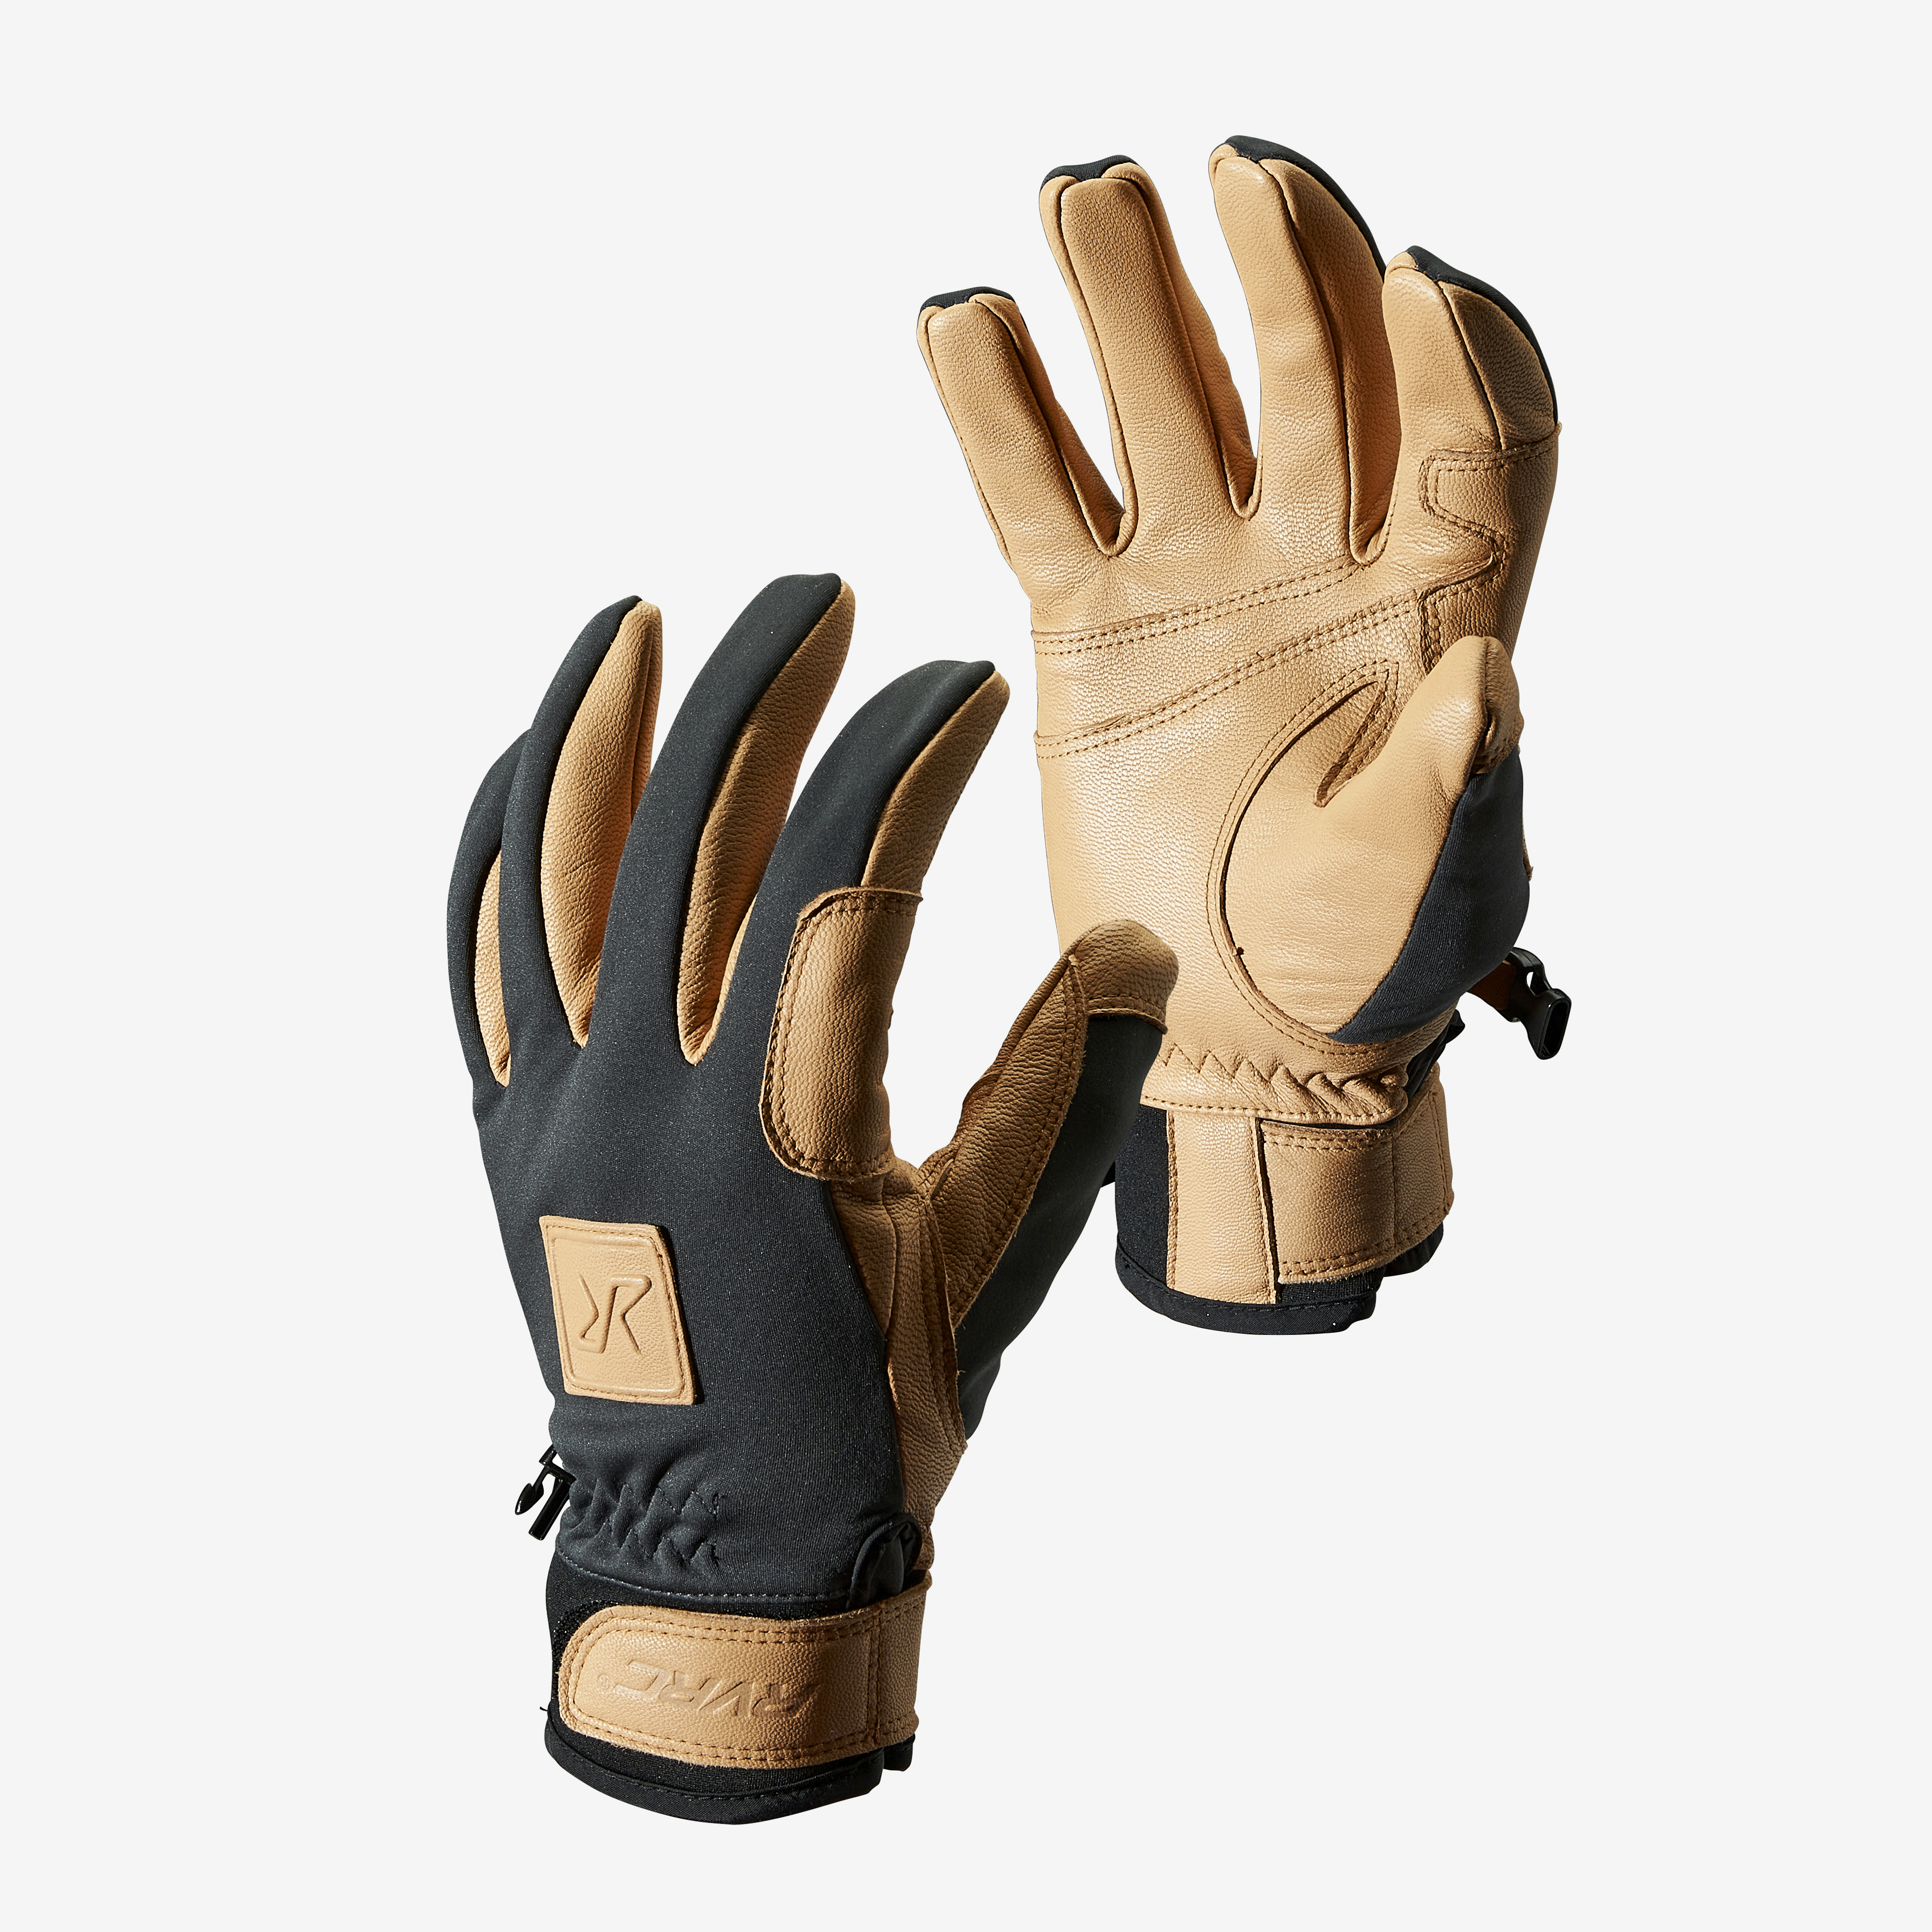 Outdoor Glove Unisex Tan/Anthracite Storlek:G7 – Accessoarer > Handskar